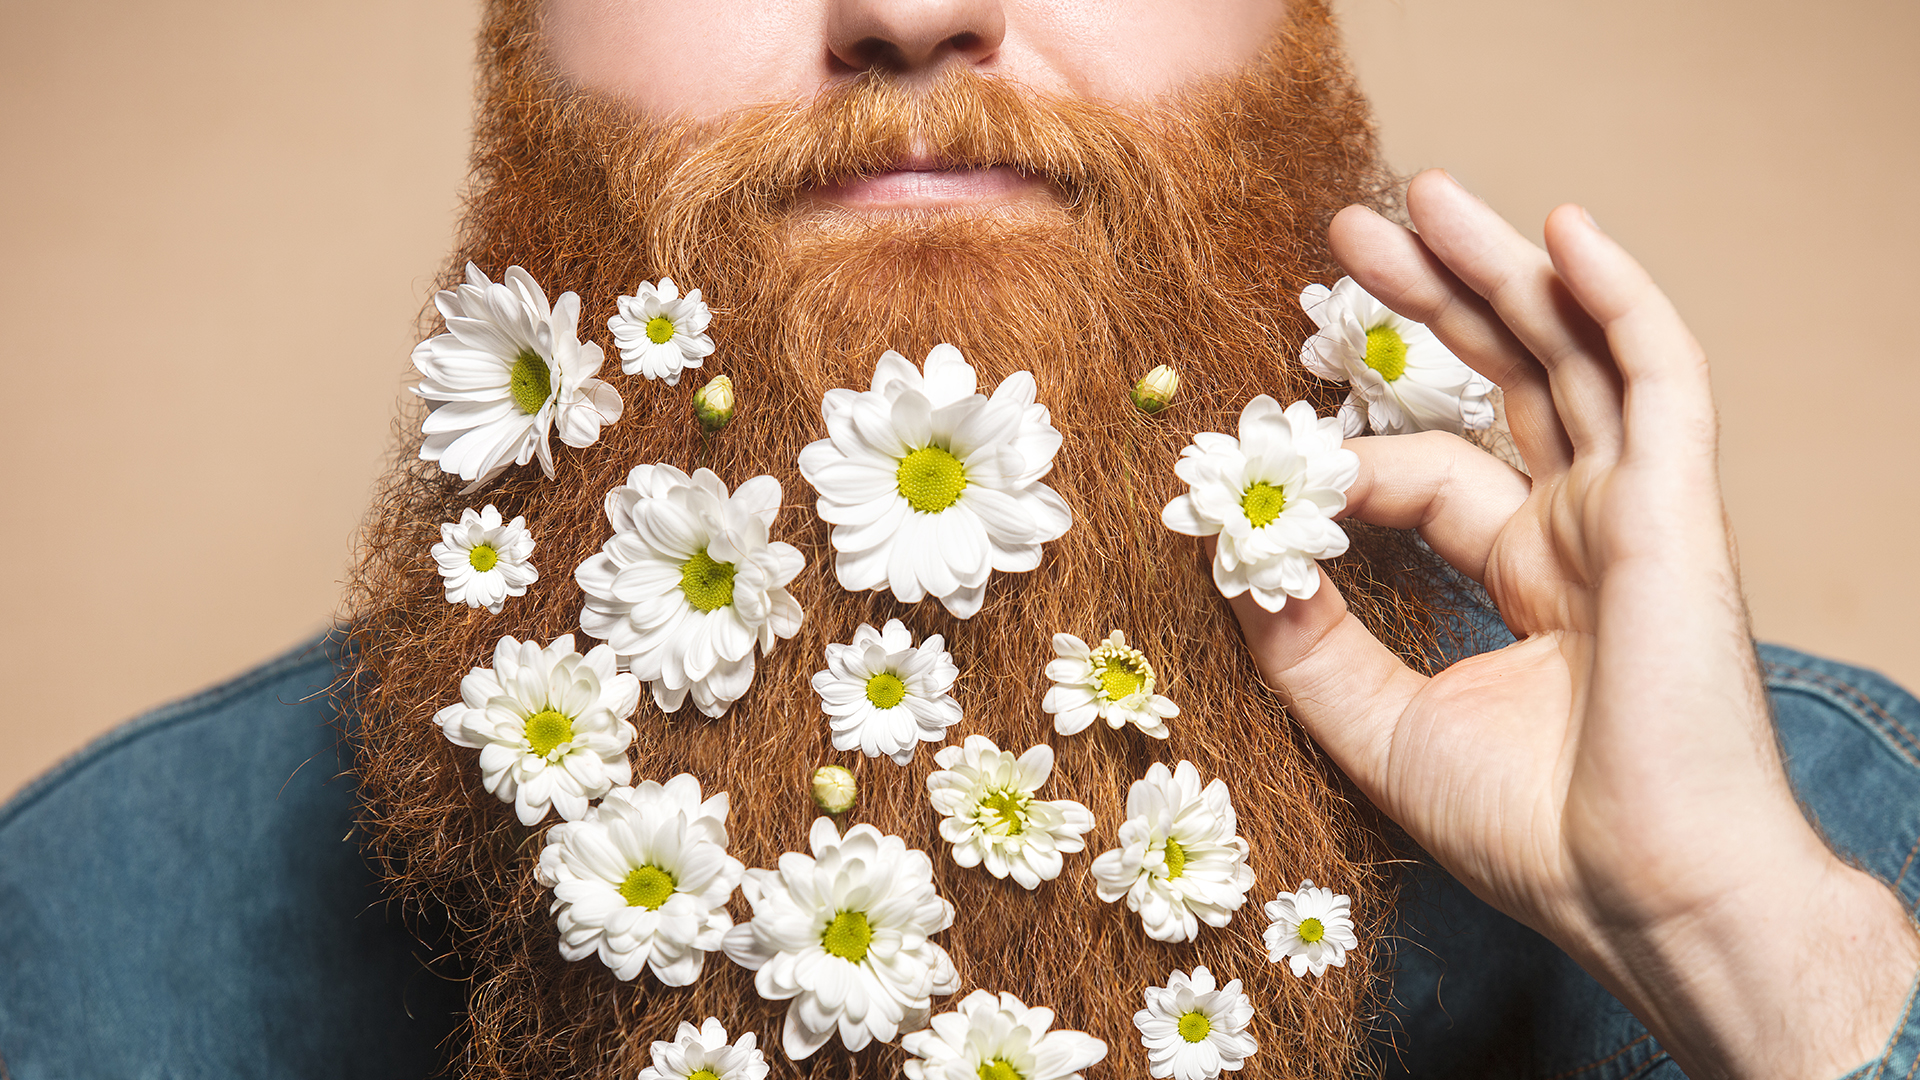 A big bushy beard decorated with daisies